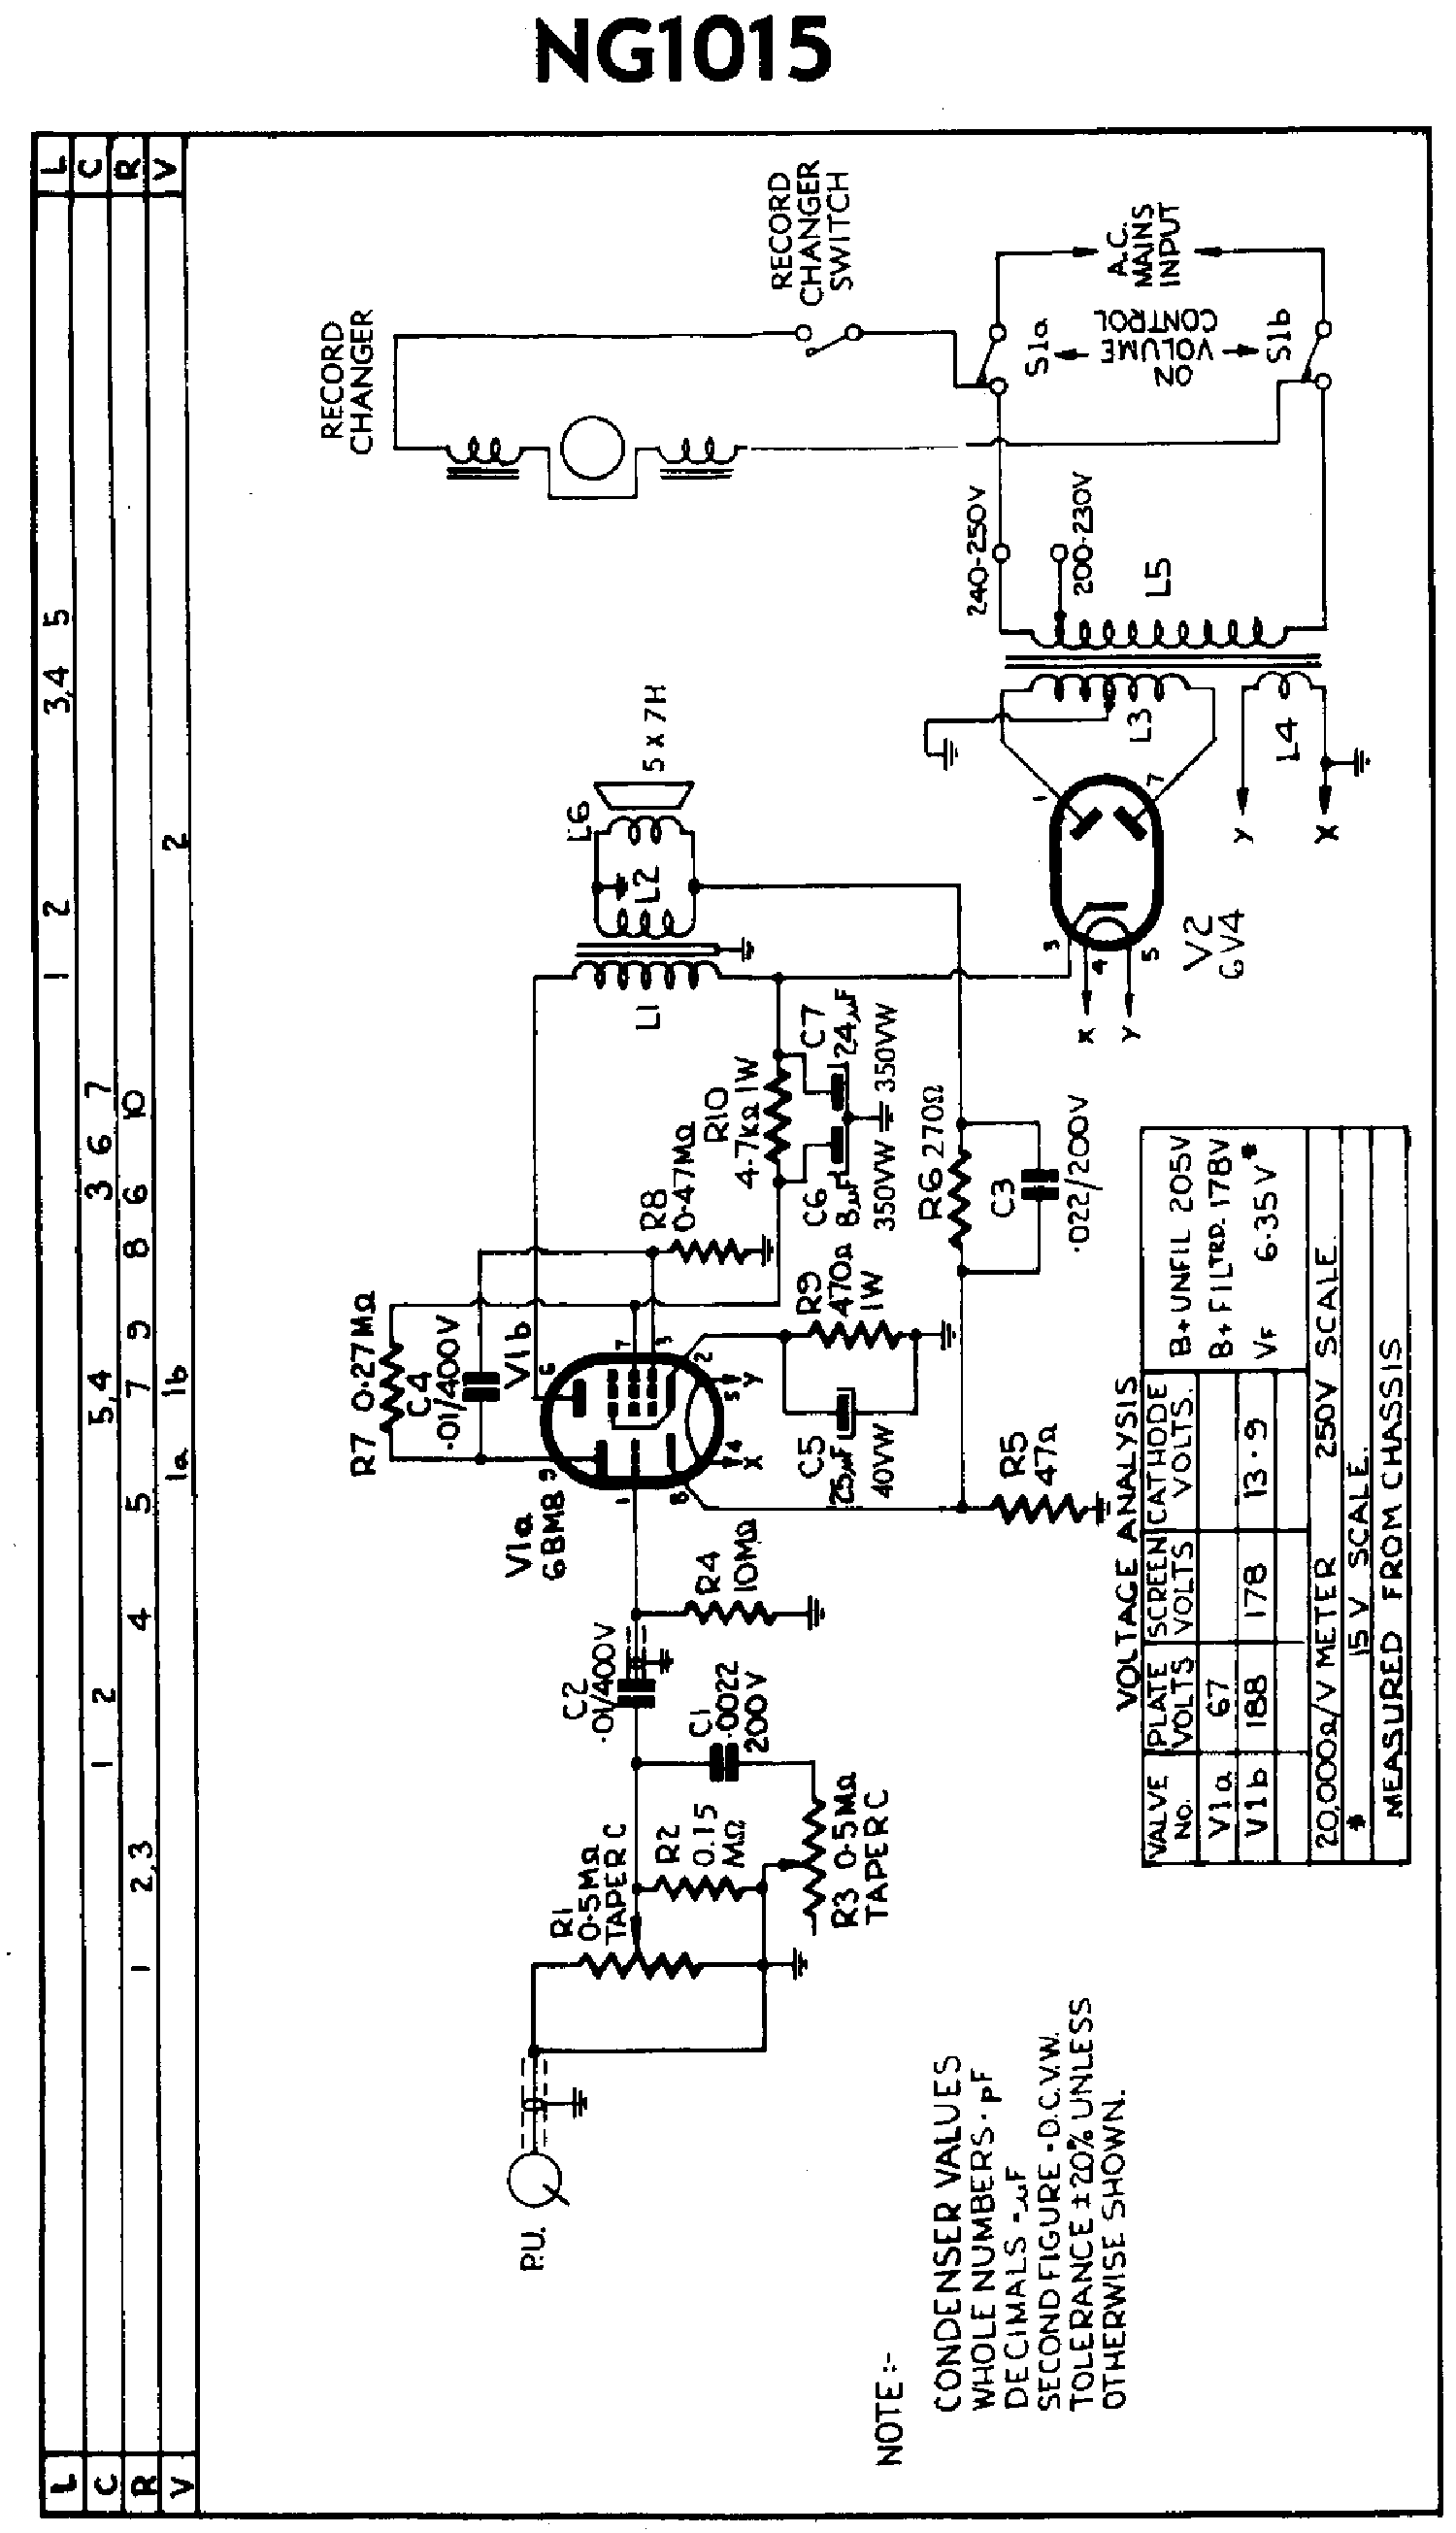 PHILIPS NG1015 AC TRANSPORTABLE PHONOGRAMM SM service manual (2nd page)